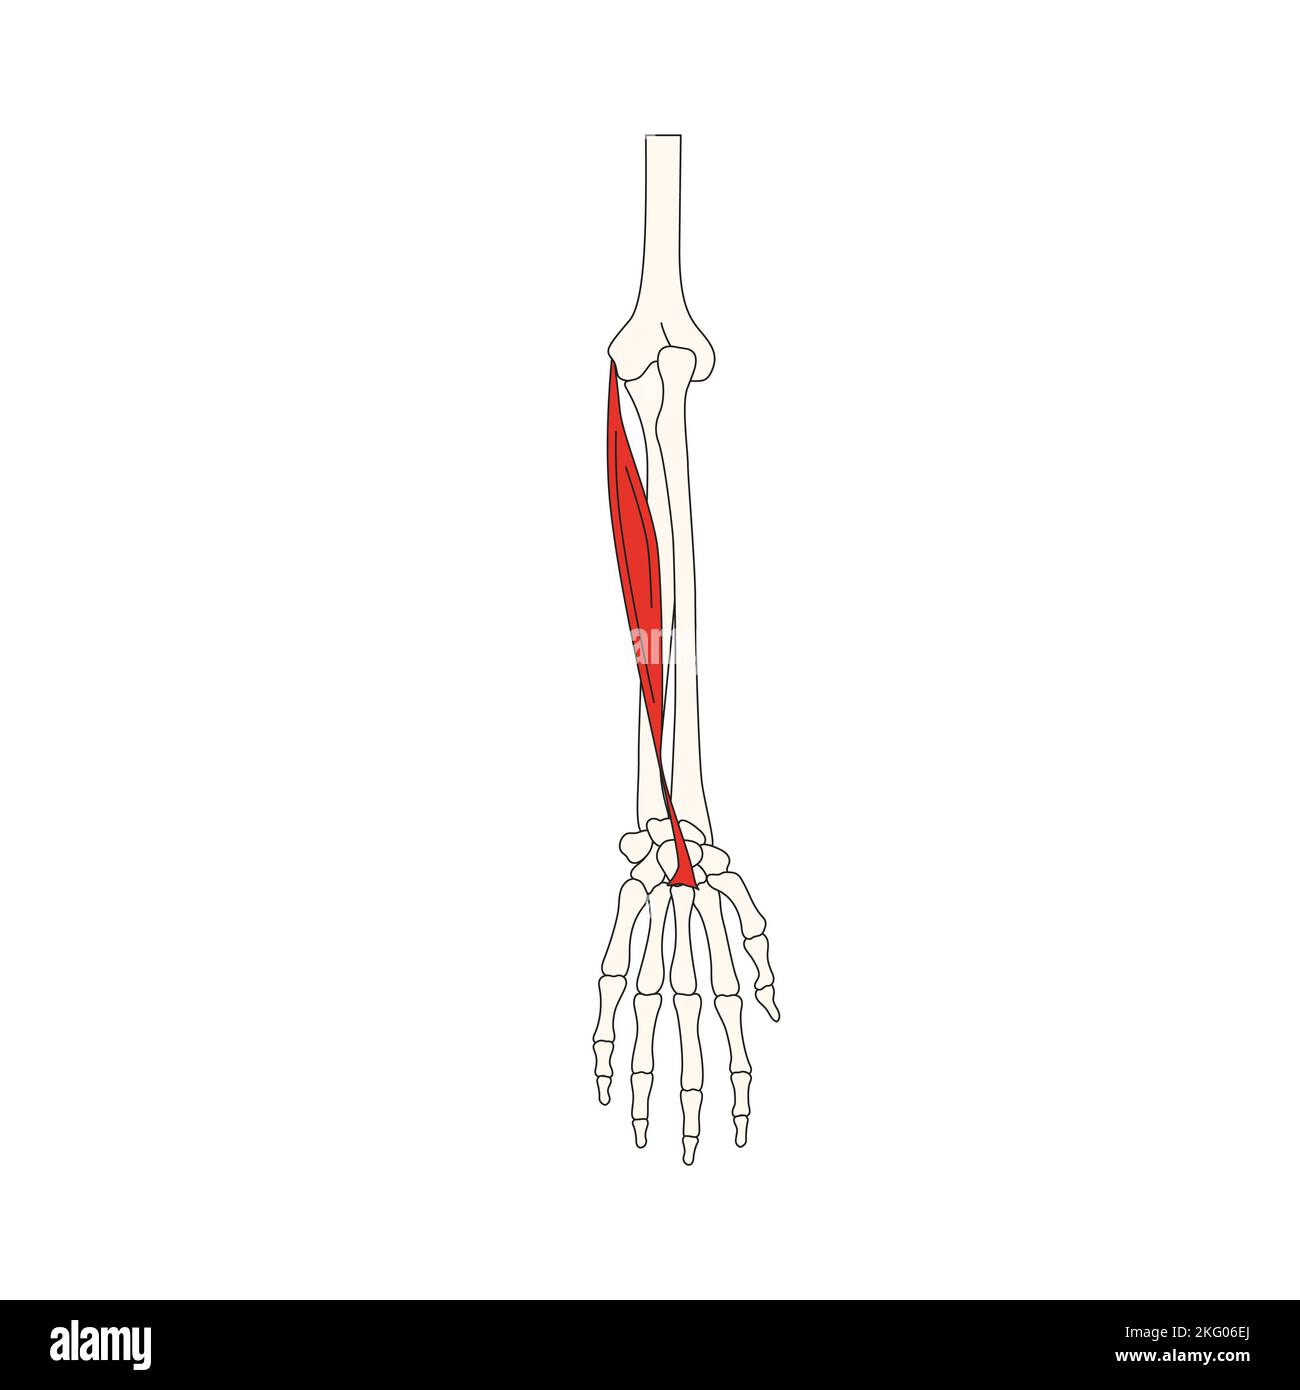 human anatomy drawing flexor carpi radialis Stock Photo